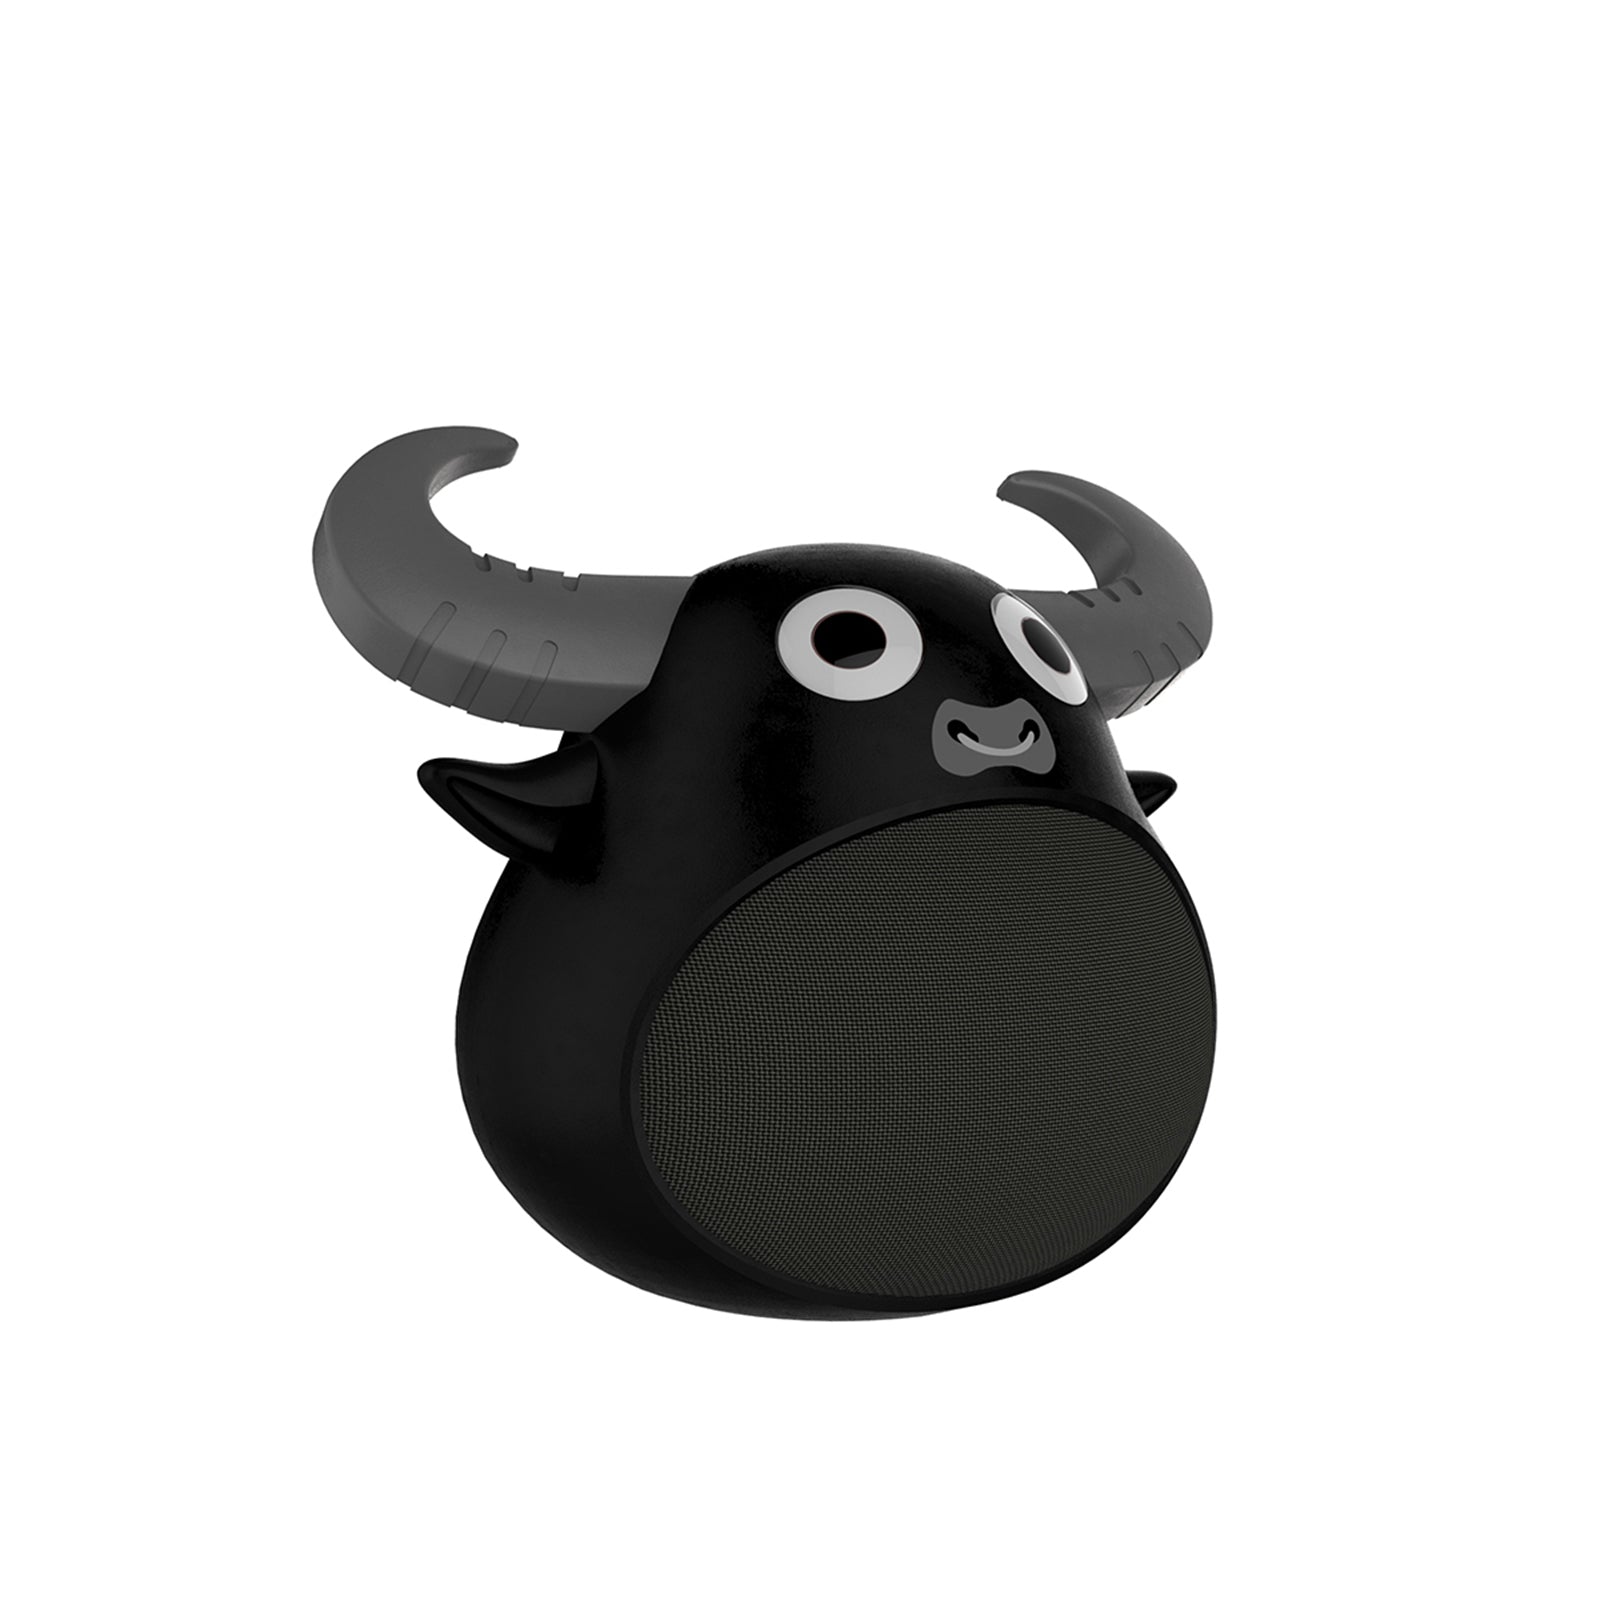 Fitsmart Bluetooth Animal Face Speaker Portable Wireless Stereo Sound - Black - SILBERSHELL